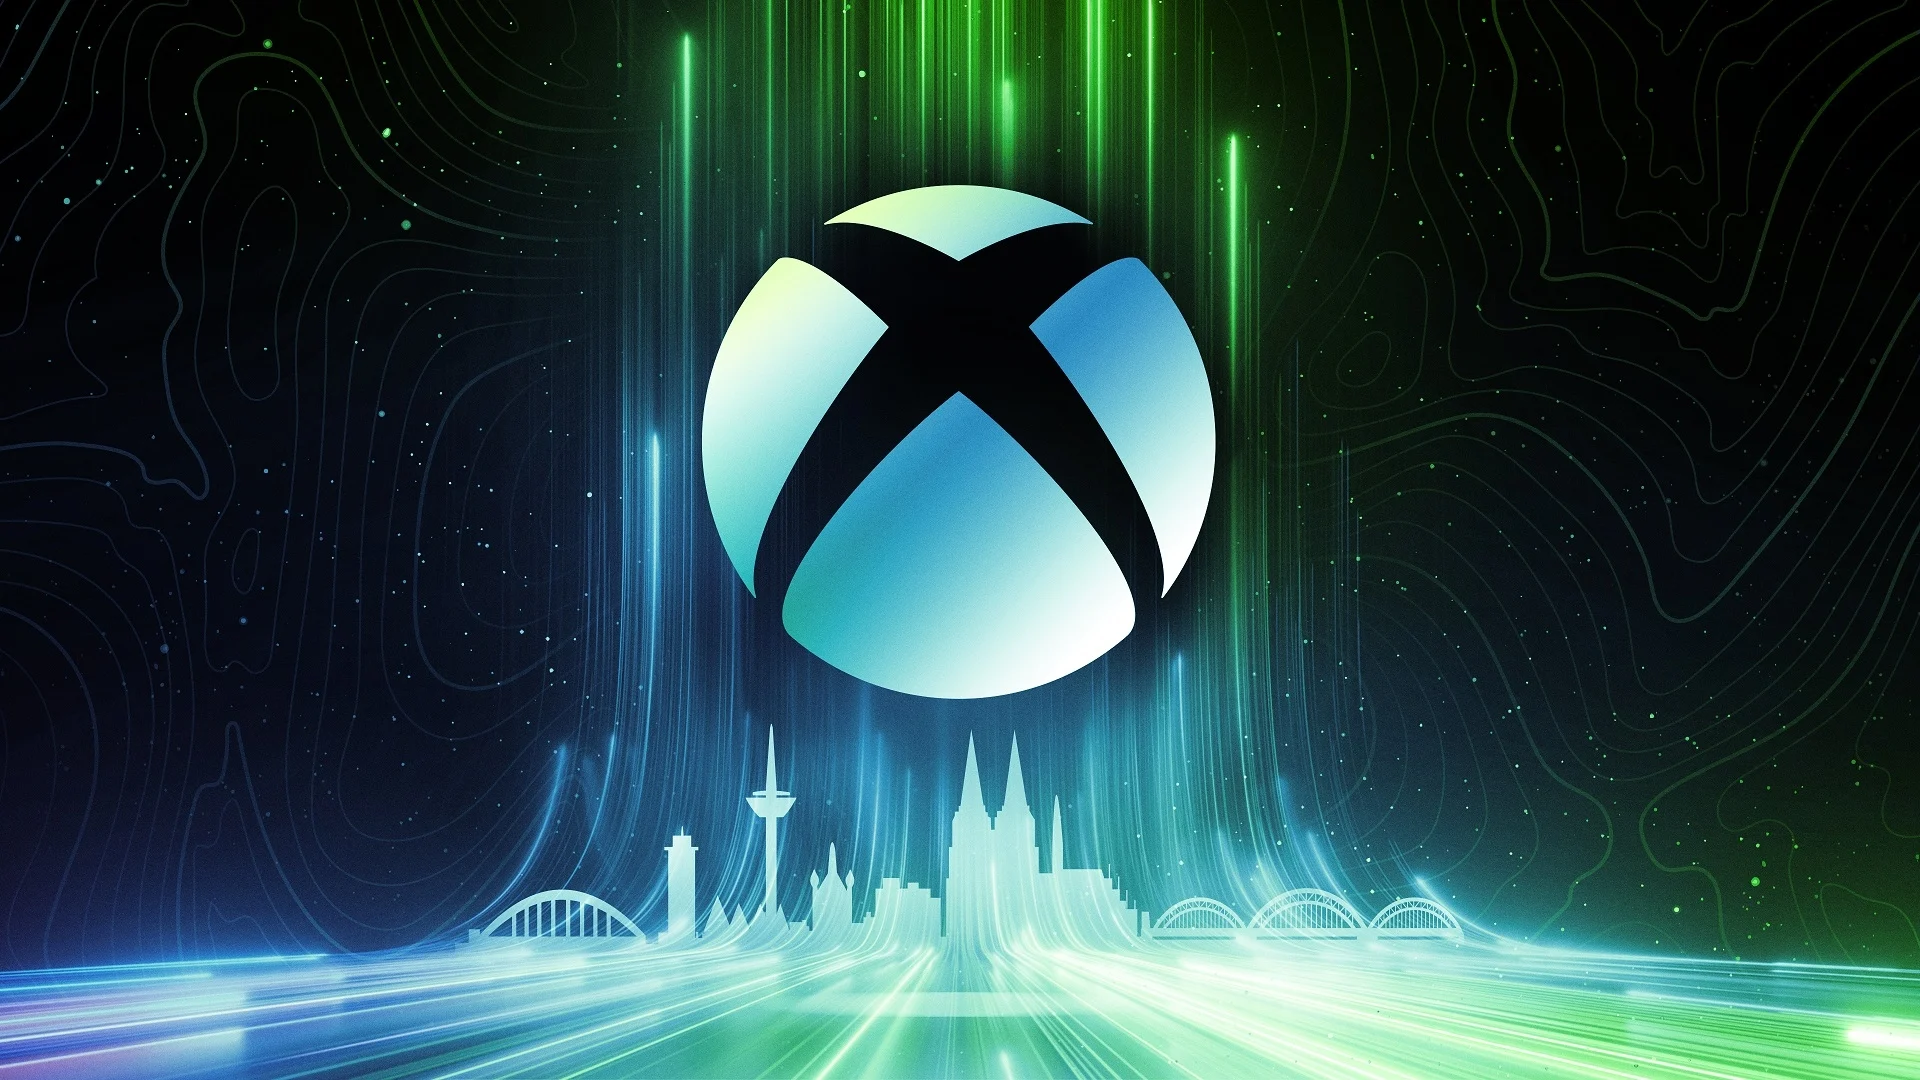 "Japanese publishers need Xbox", says former Sony executive